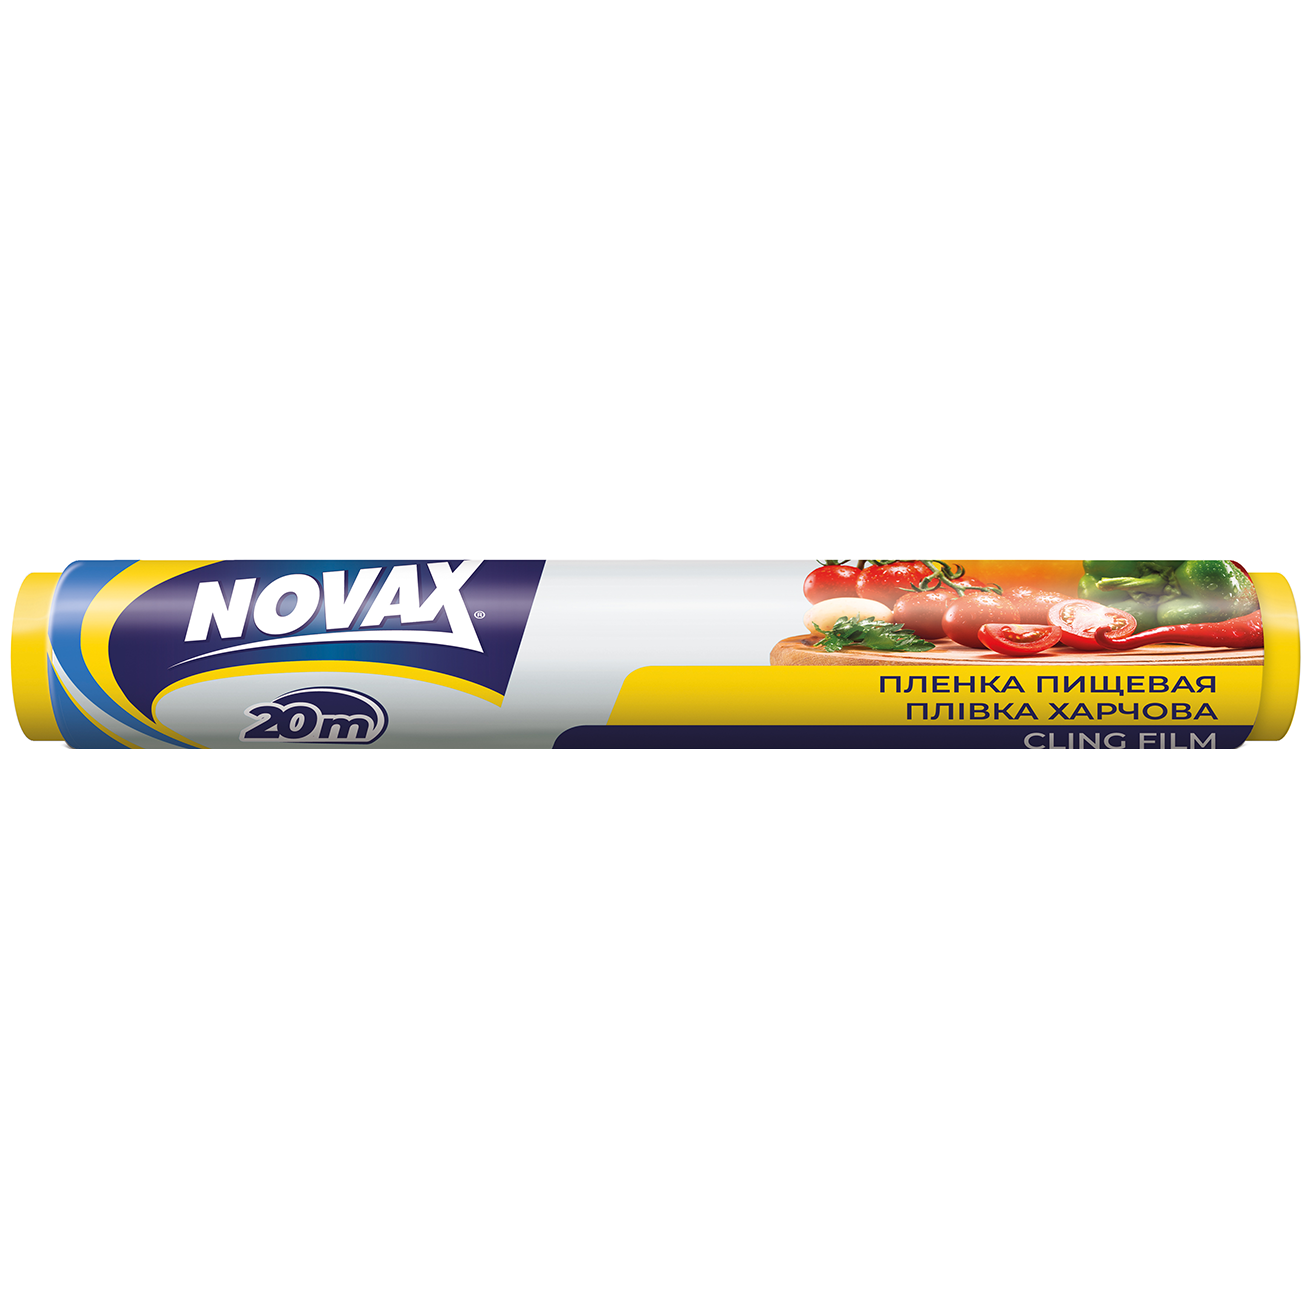 Пленка для продуктов Novax, 20 м - фото 1